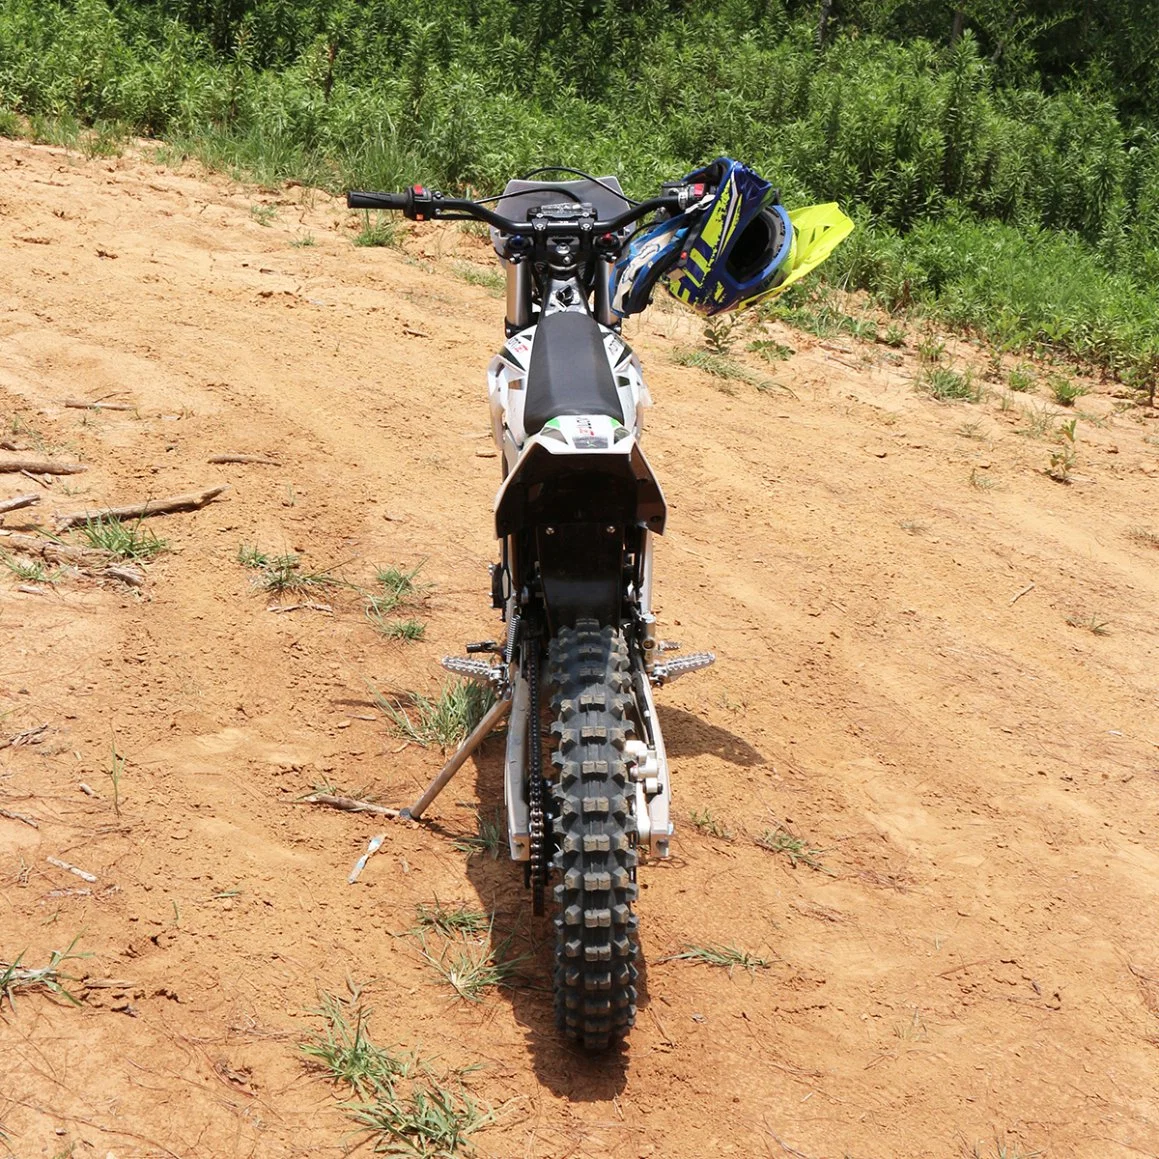 Potente Mountainbike Scrambler grasa de la montaña de neumáticos E Pit Dirt Bike eléctrica bicicleta moto para adultos